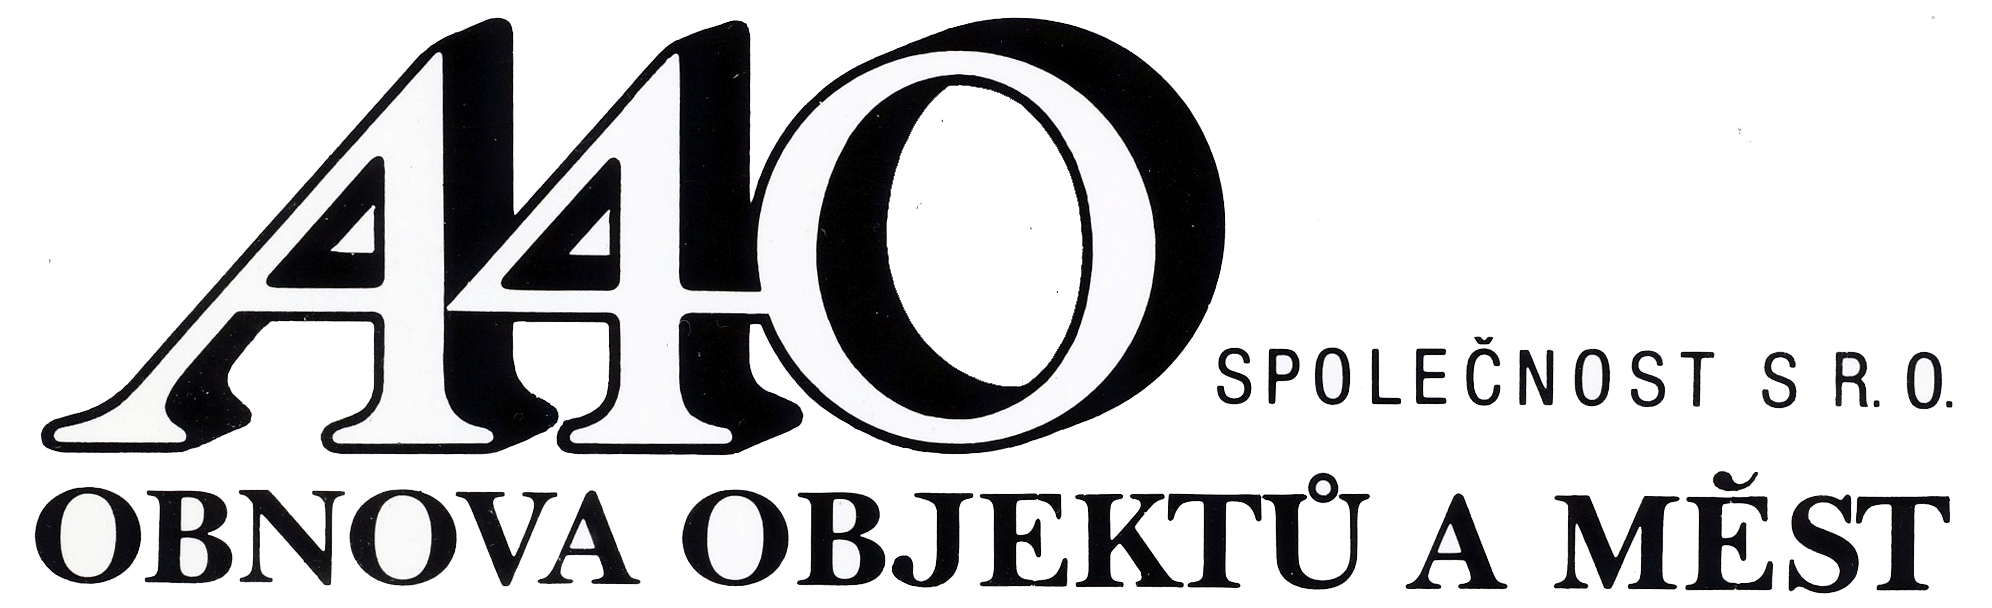 logo-A40-cb